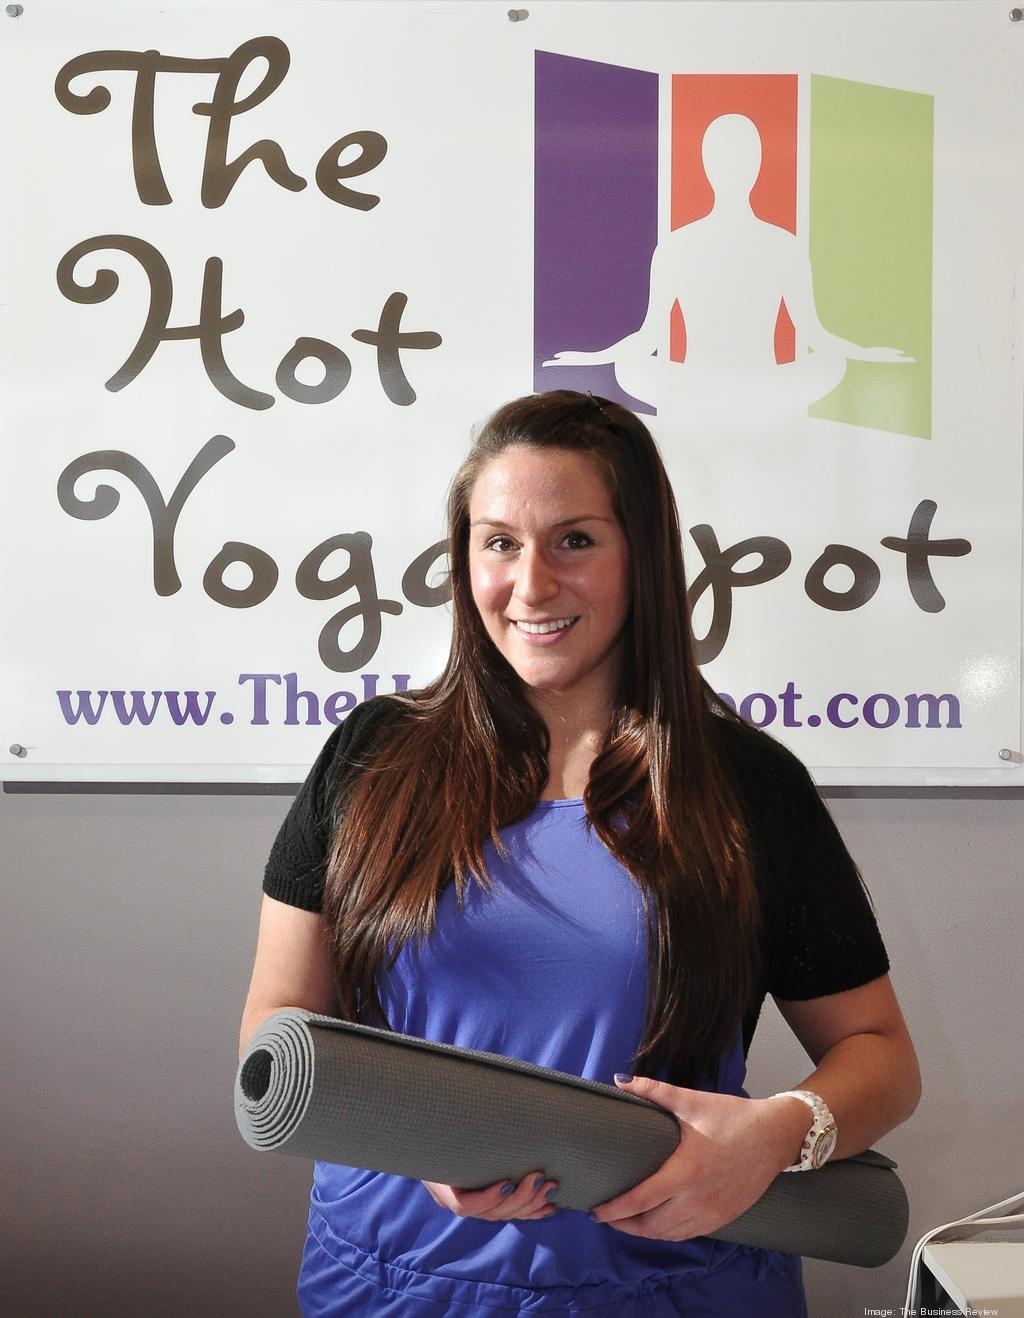 Hot Yoga Spot brand adds 5th studio in Saratoga Springs, New York